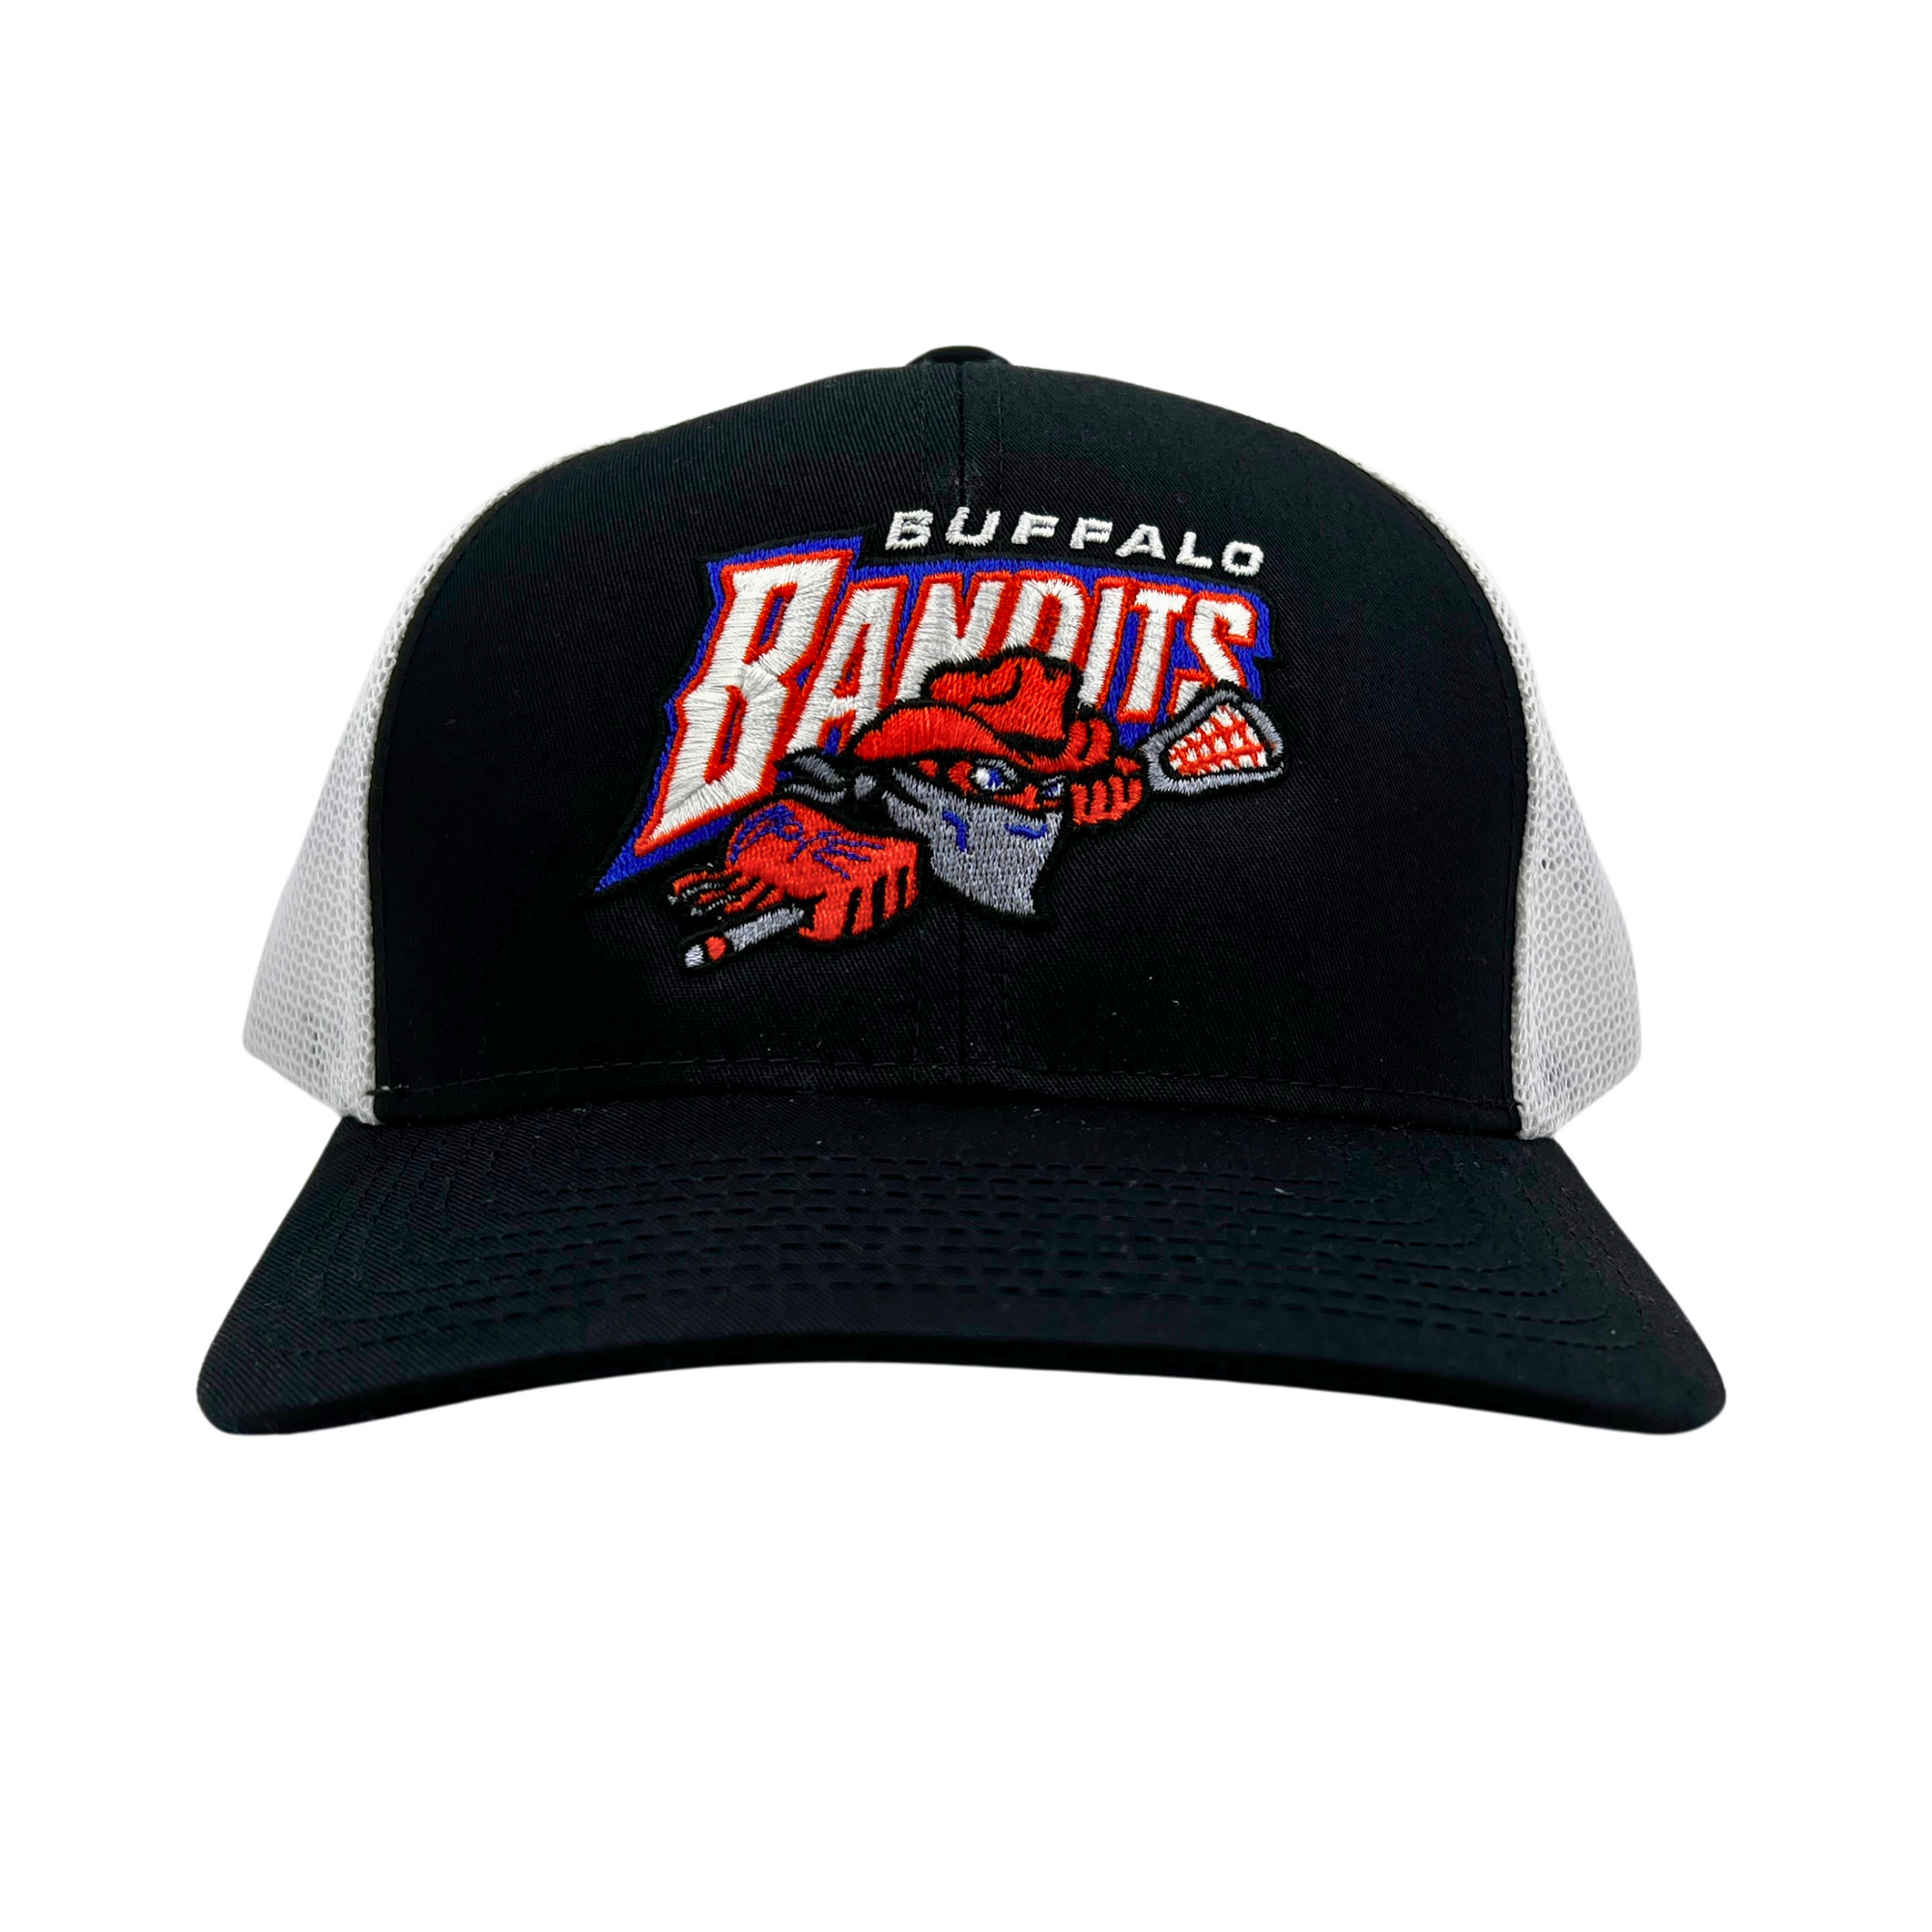 Buffalo Bandits with logo Black & White Trucker Hat